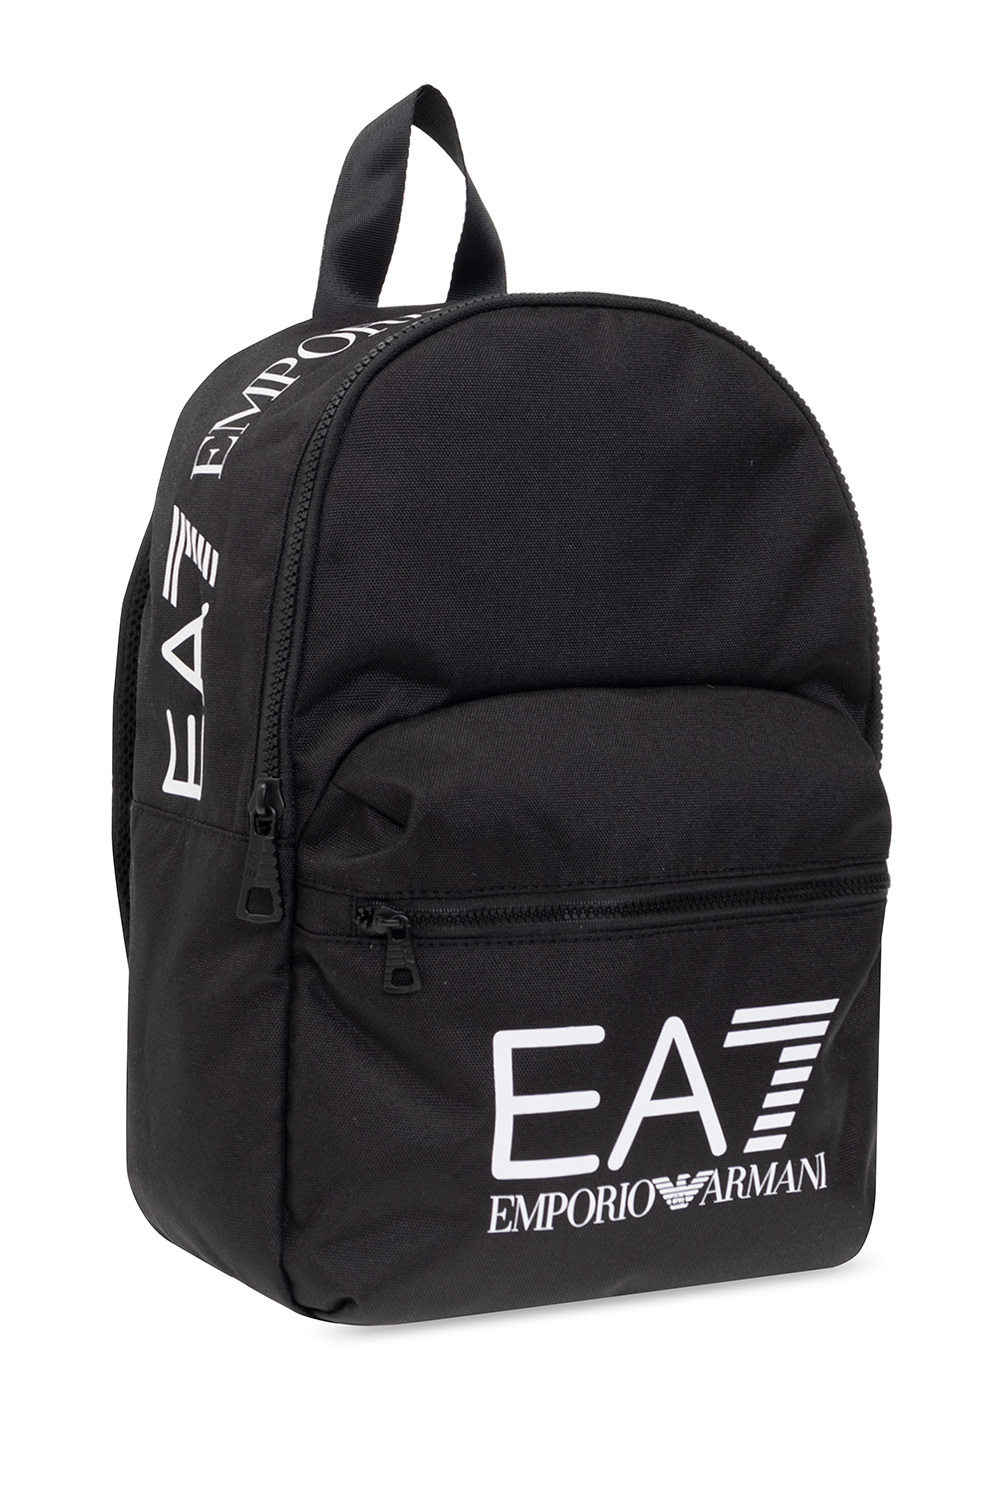 EA7 Emporio Armani Il n'y a pas d'avis disponible pour Emporio Armani CC717-PACK DE 3